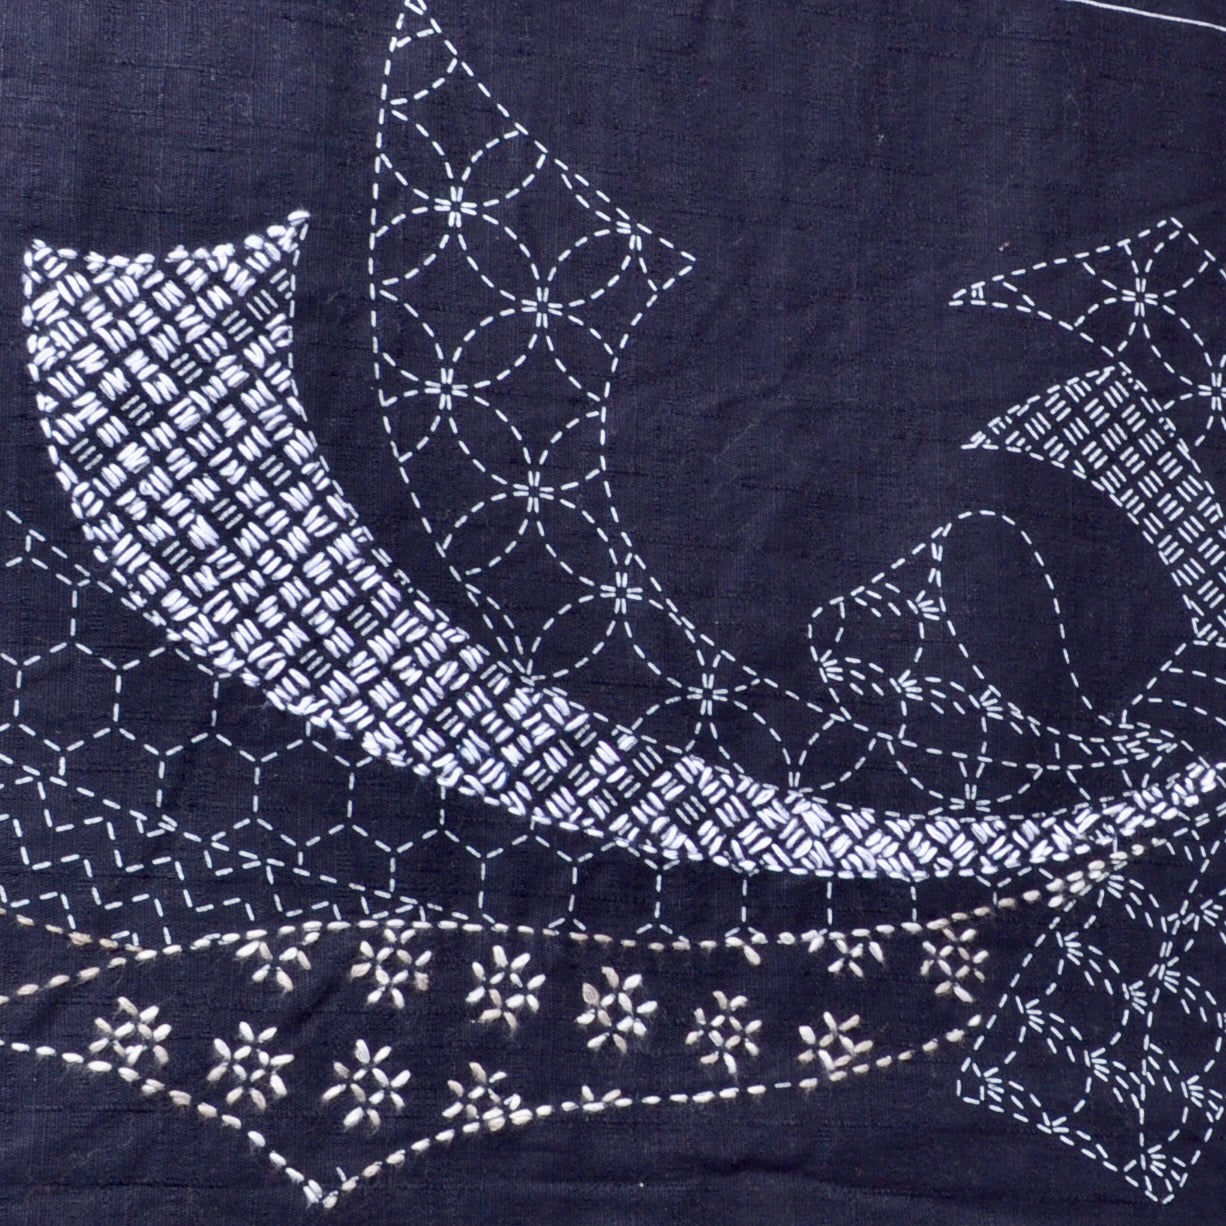 Non-Traditional Sashiko Stitching Projects